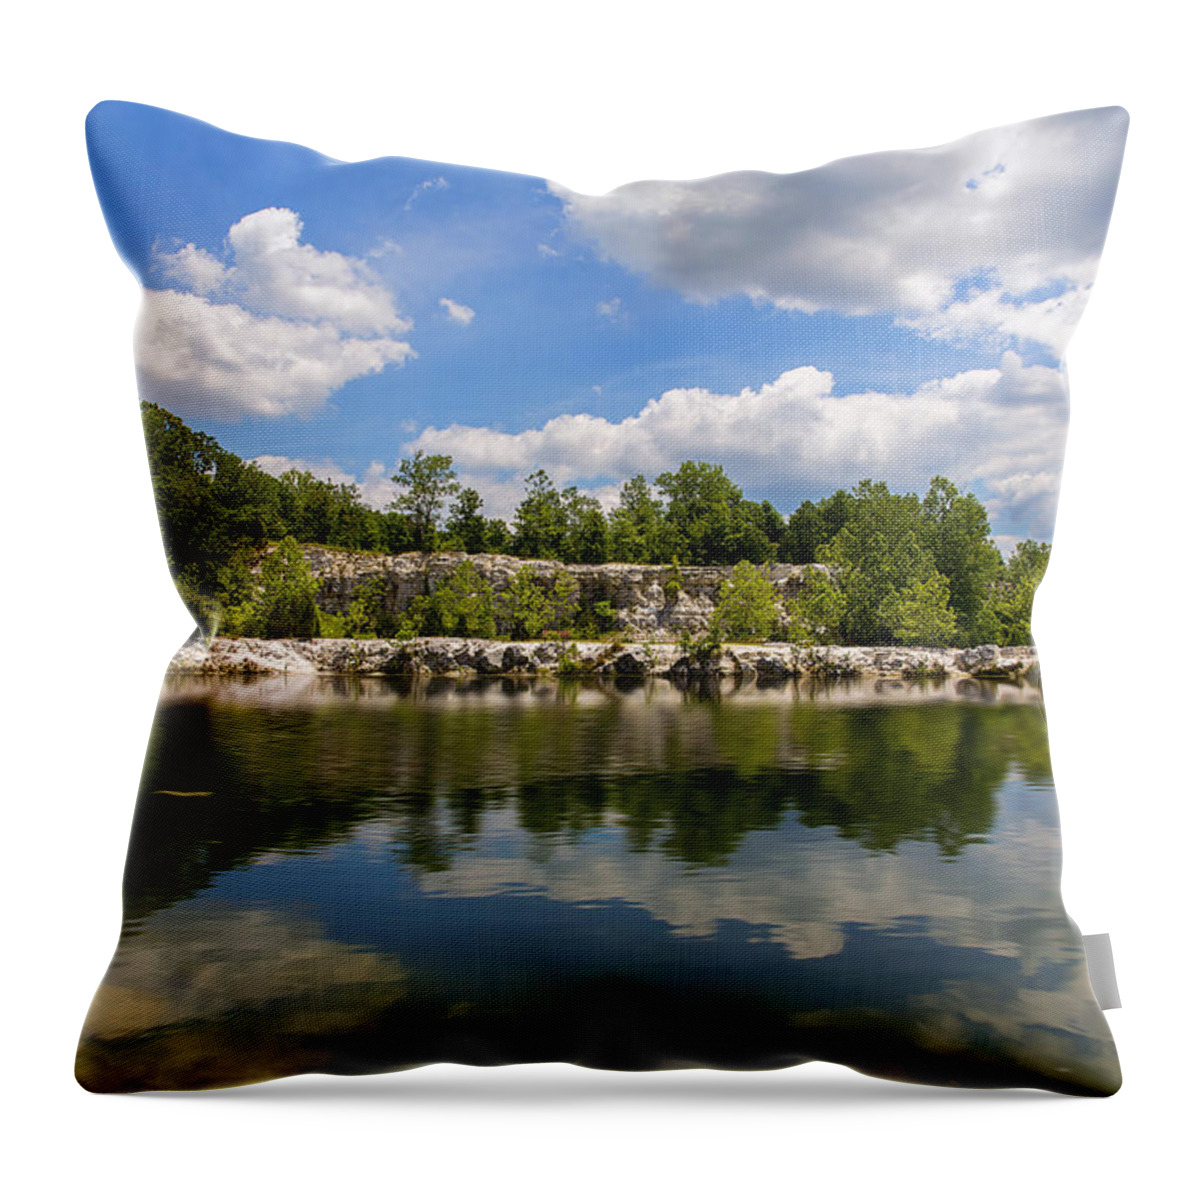 Klondike Park Throw Pillow featuring the photograph A Beautiful Day At Klondike Lake by Bill and Linda Tiepelman